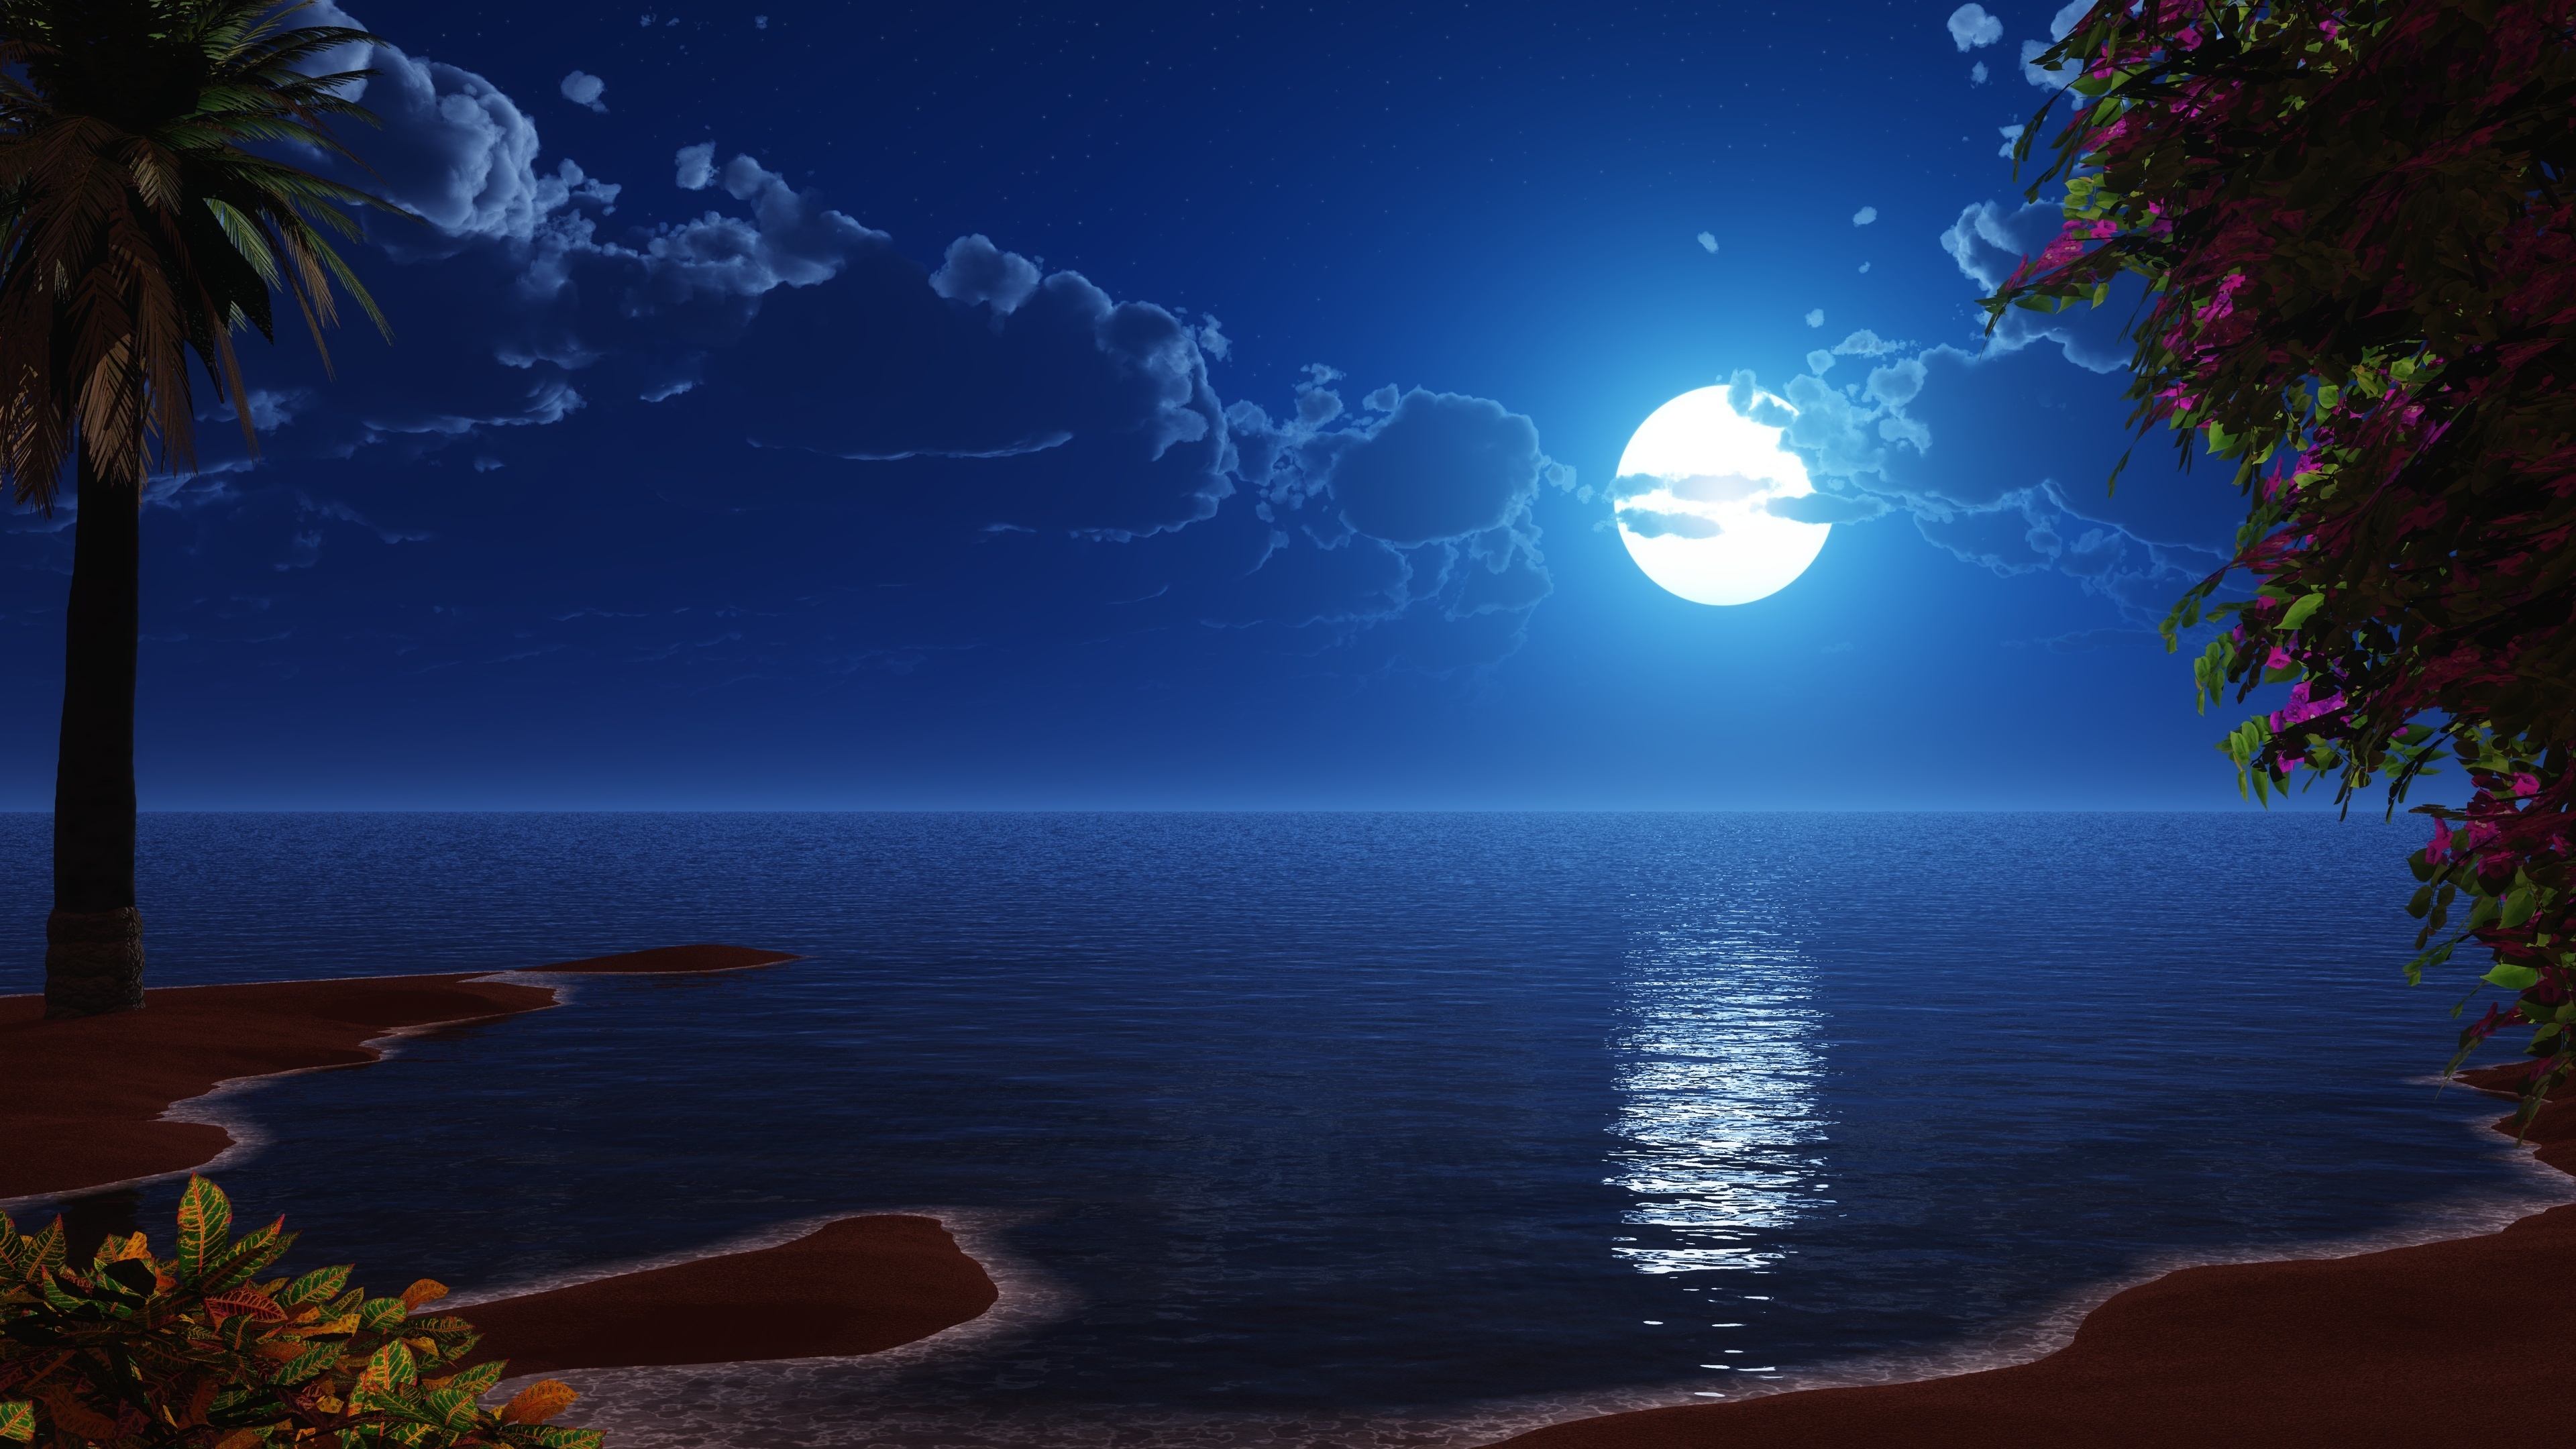 Download Wallpaper X Tropical Beach Coast Full Moon Night Sky Scenery Digital Art